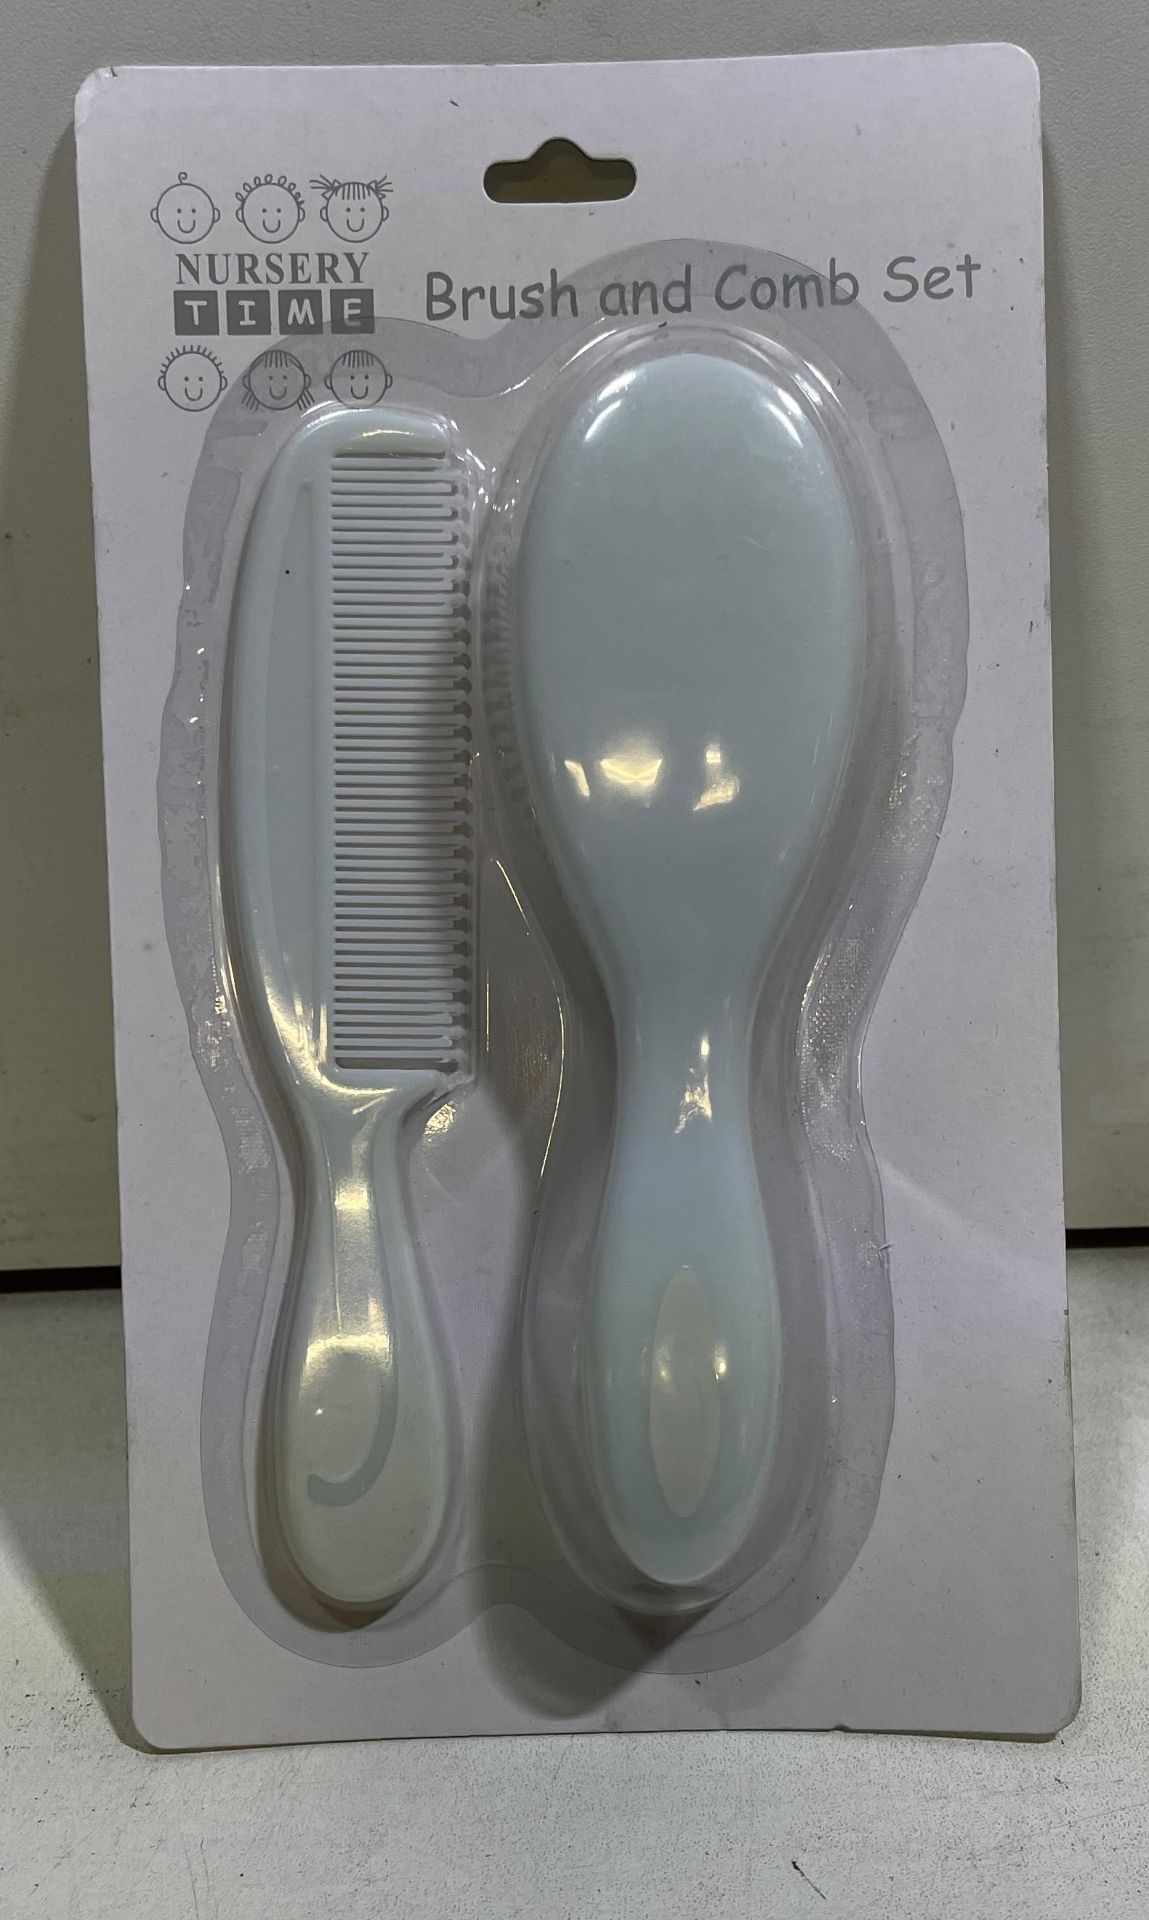 12 x Nursery Time Brush & Comb Sets | White